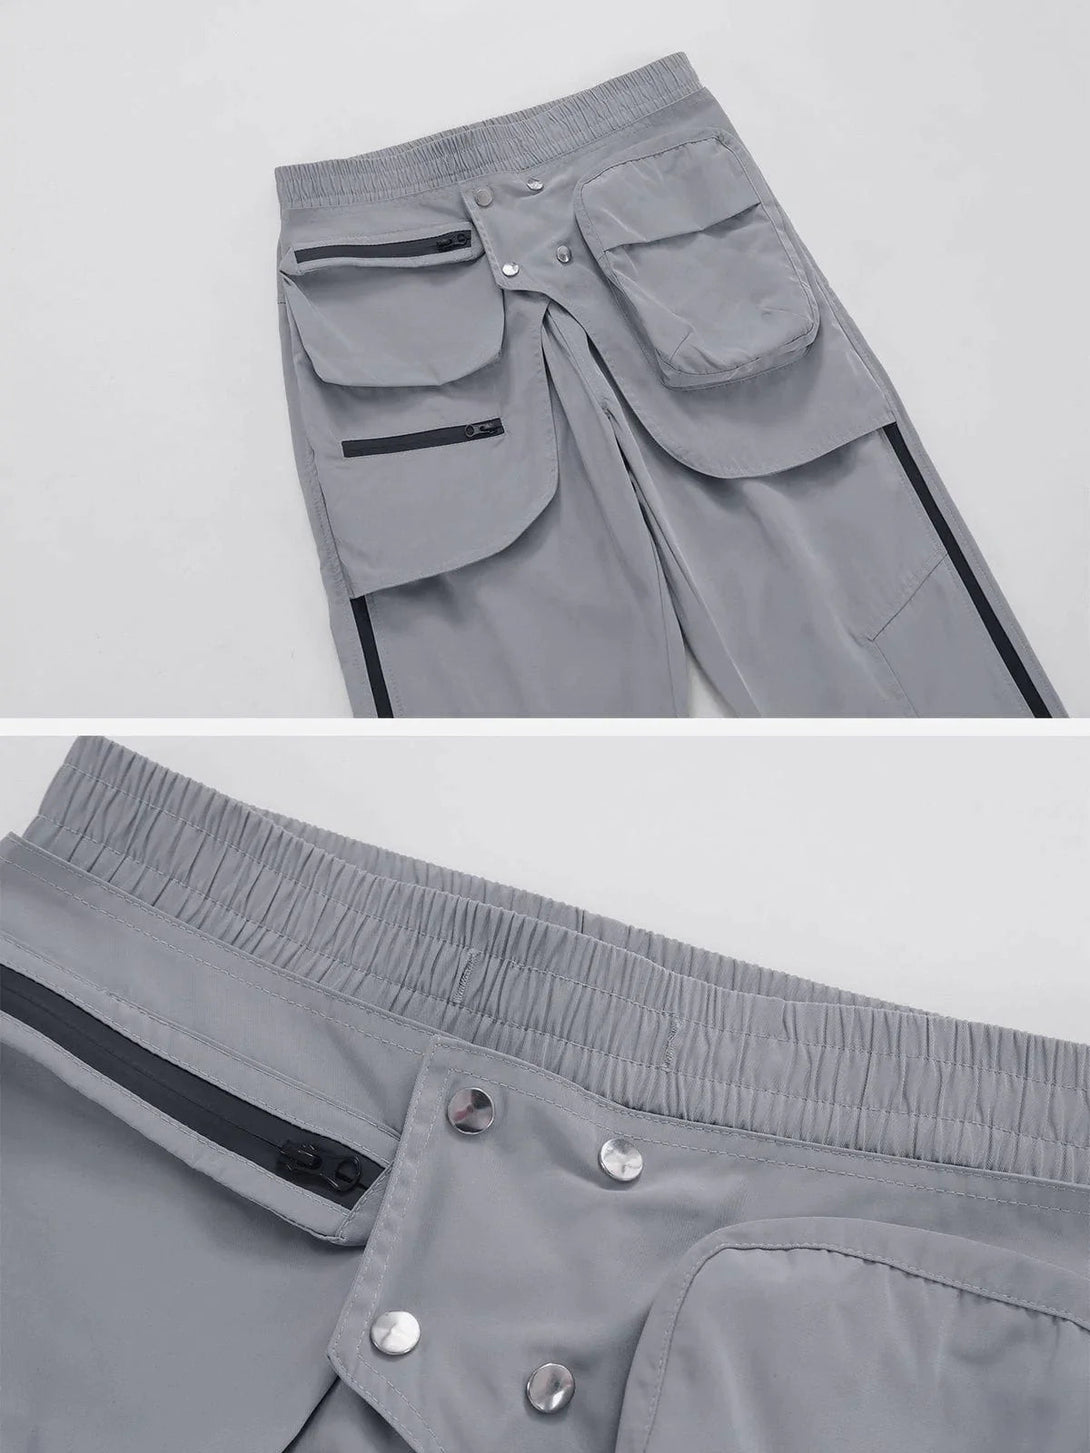 Majesda® - Fake Two Patchwork Pants outfit ideas streetwear fashion